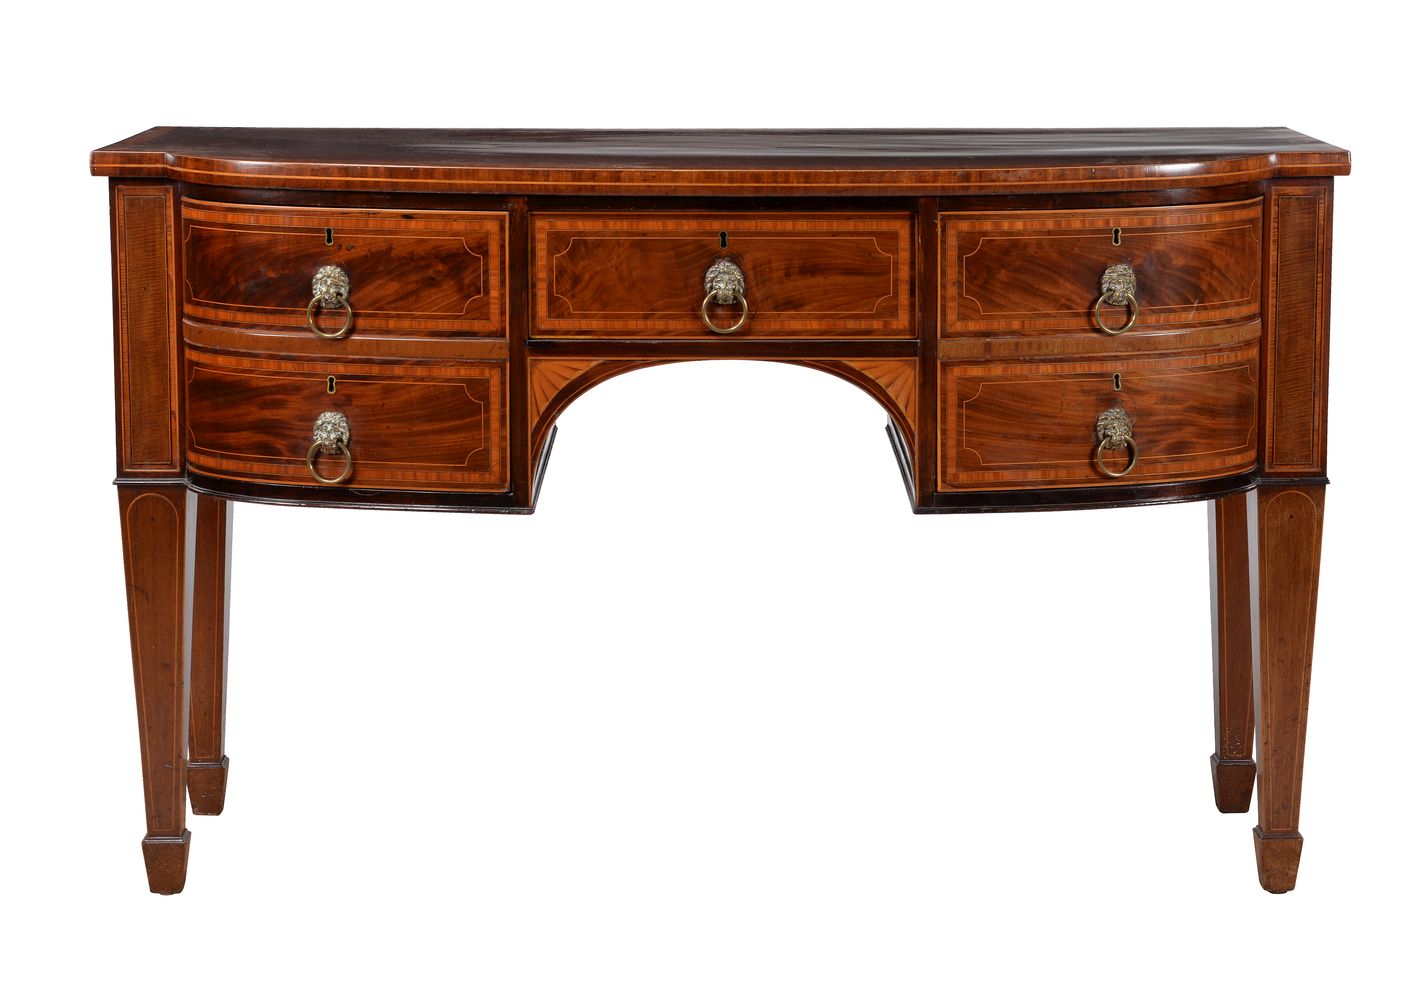 A late George III mahogany and satinwood crossbanded sideboard